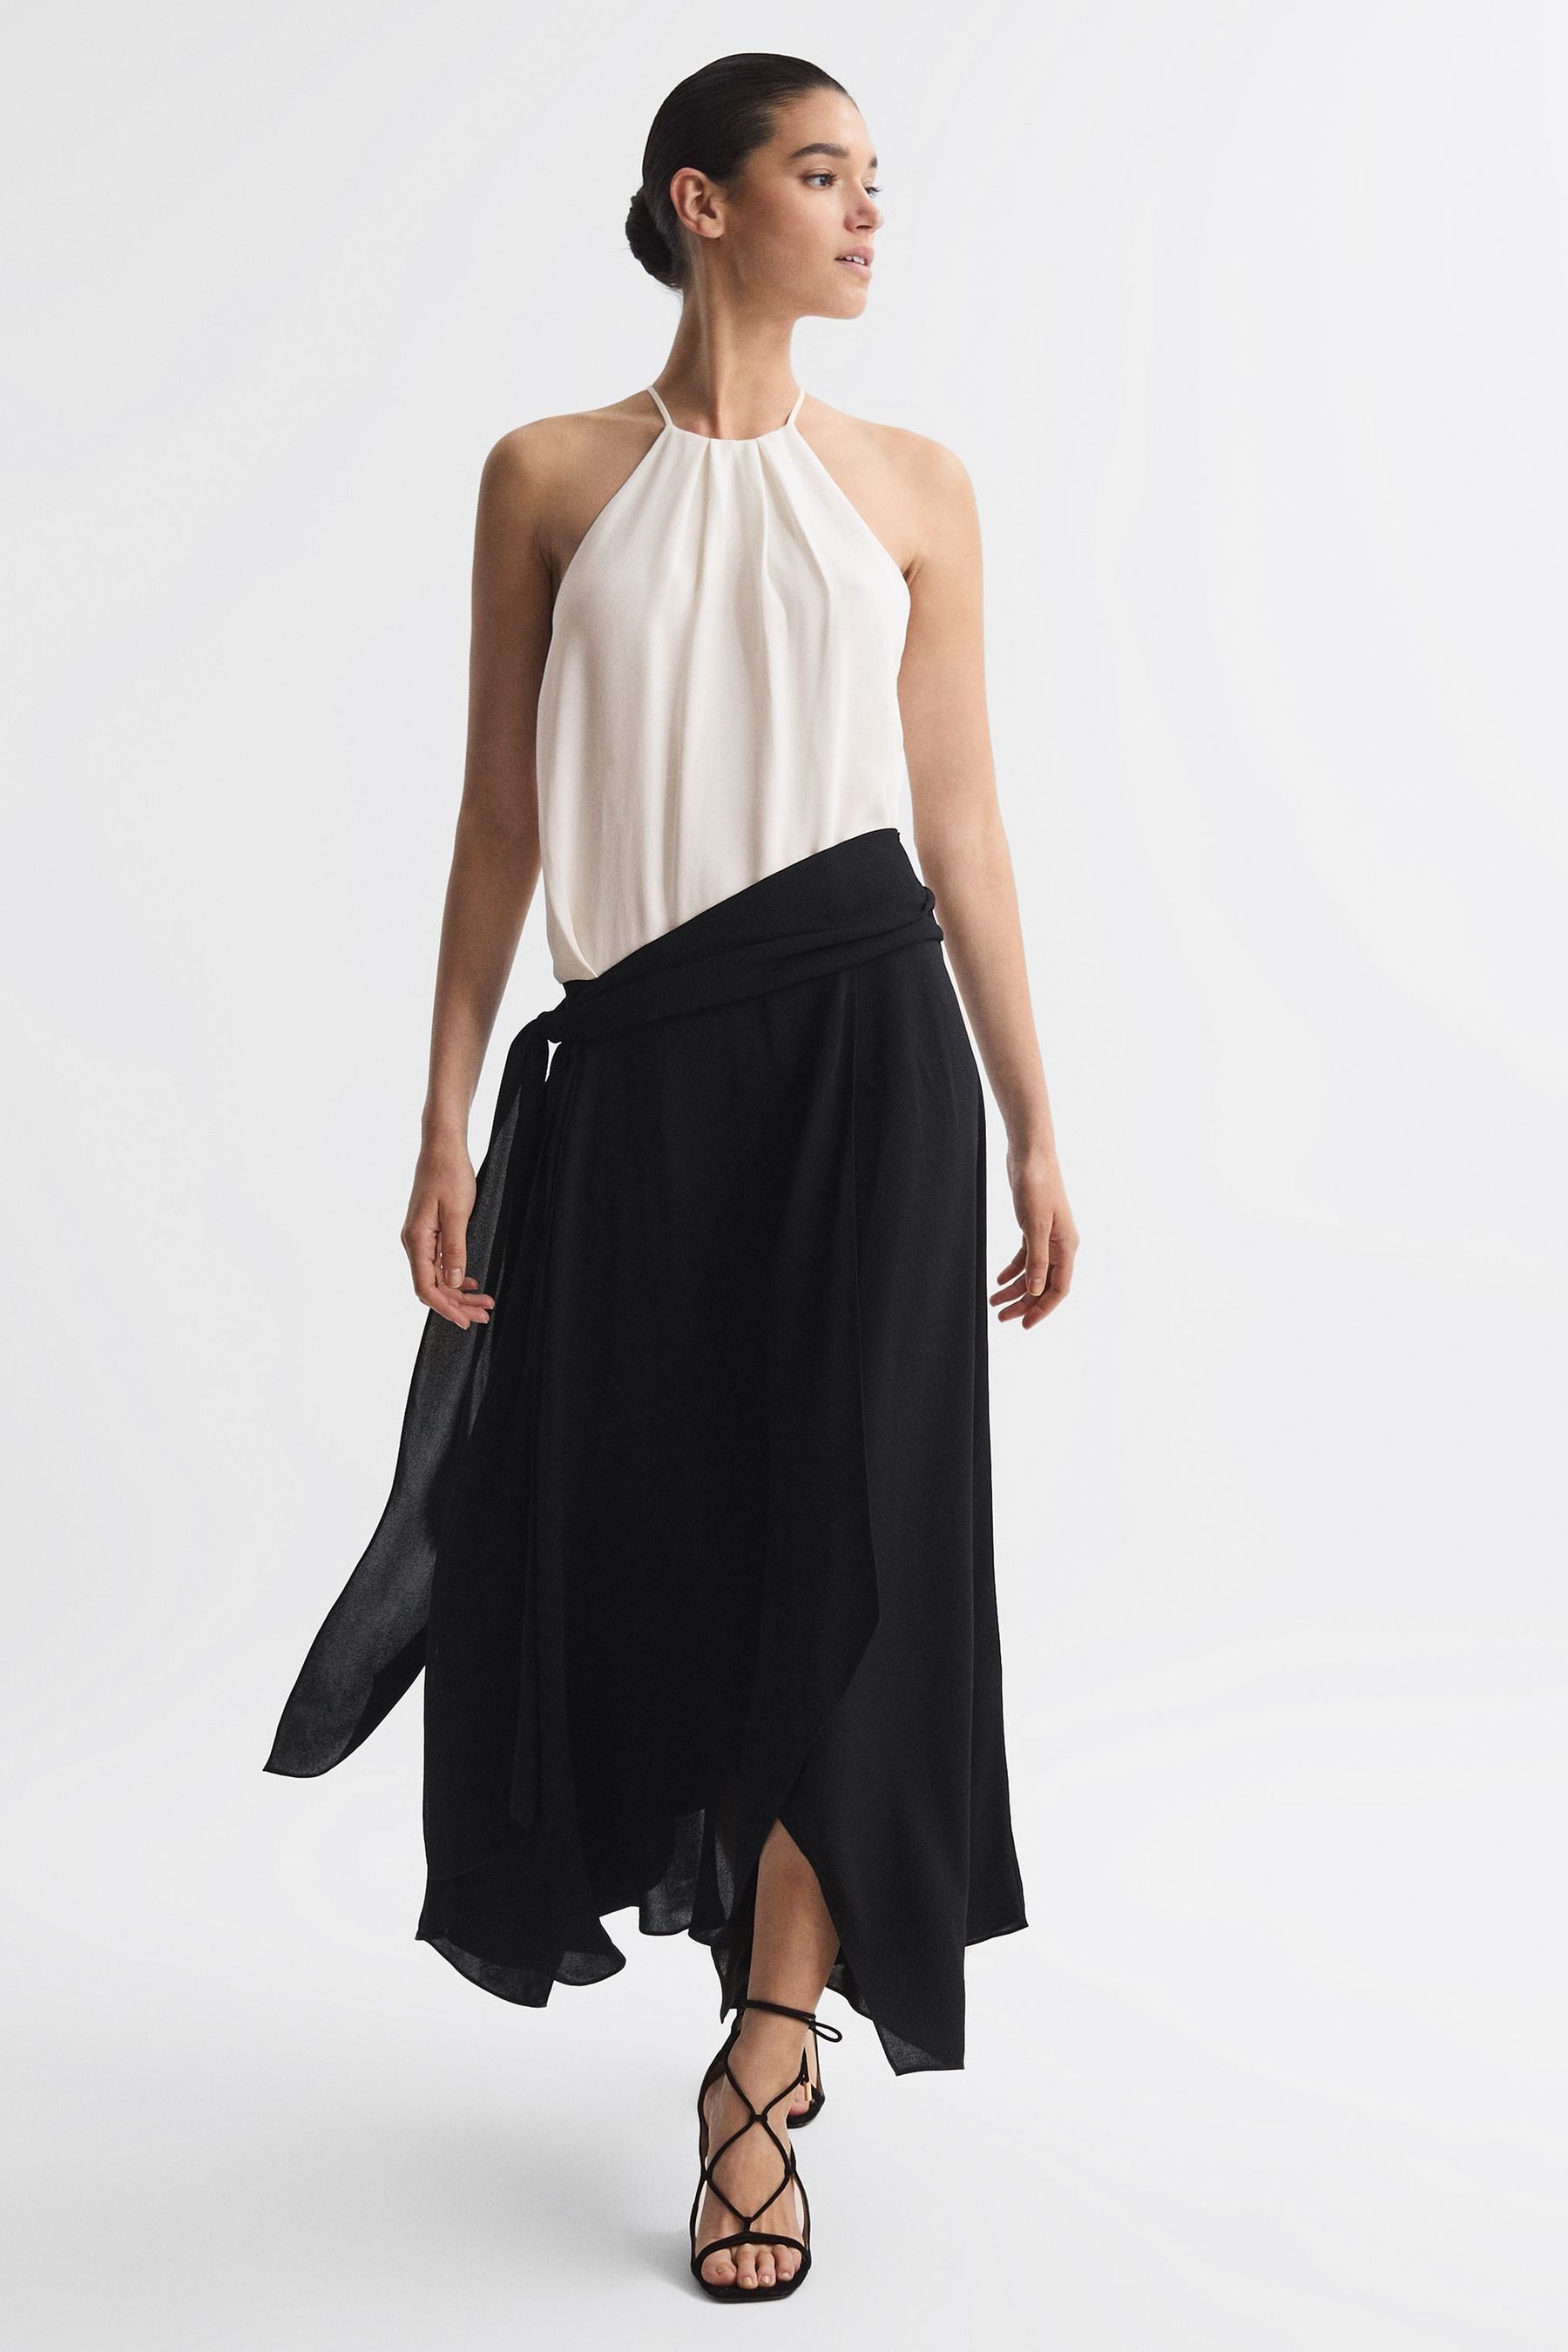 Reiss Natalia - Cream/black Asymmetric Belted Wrap Midi Dress, Us 6